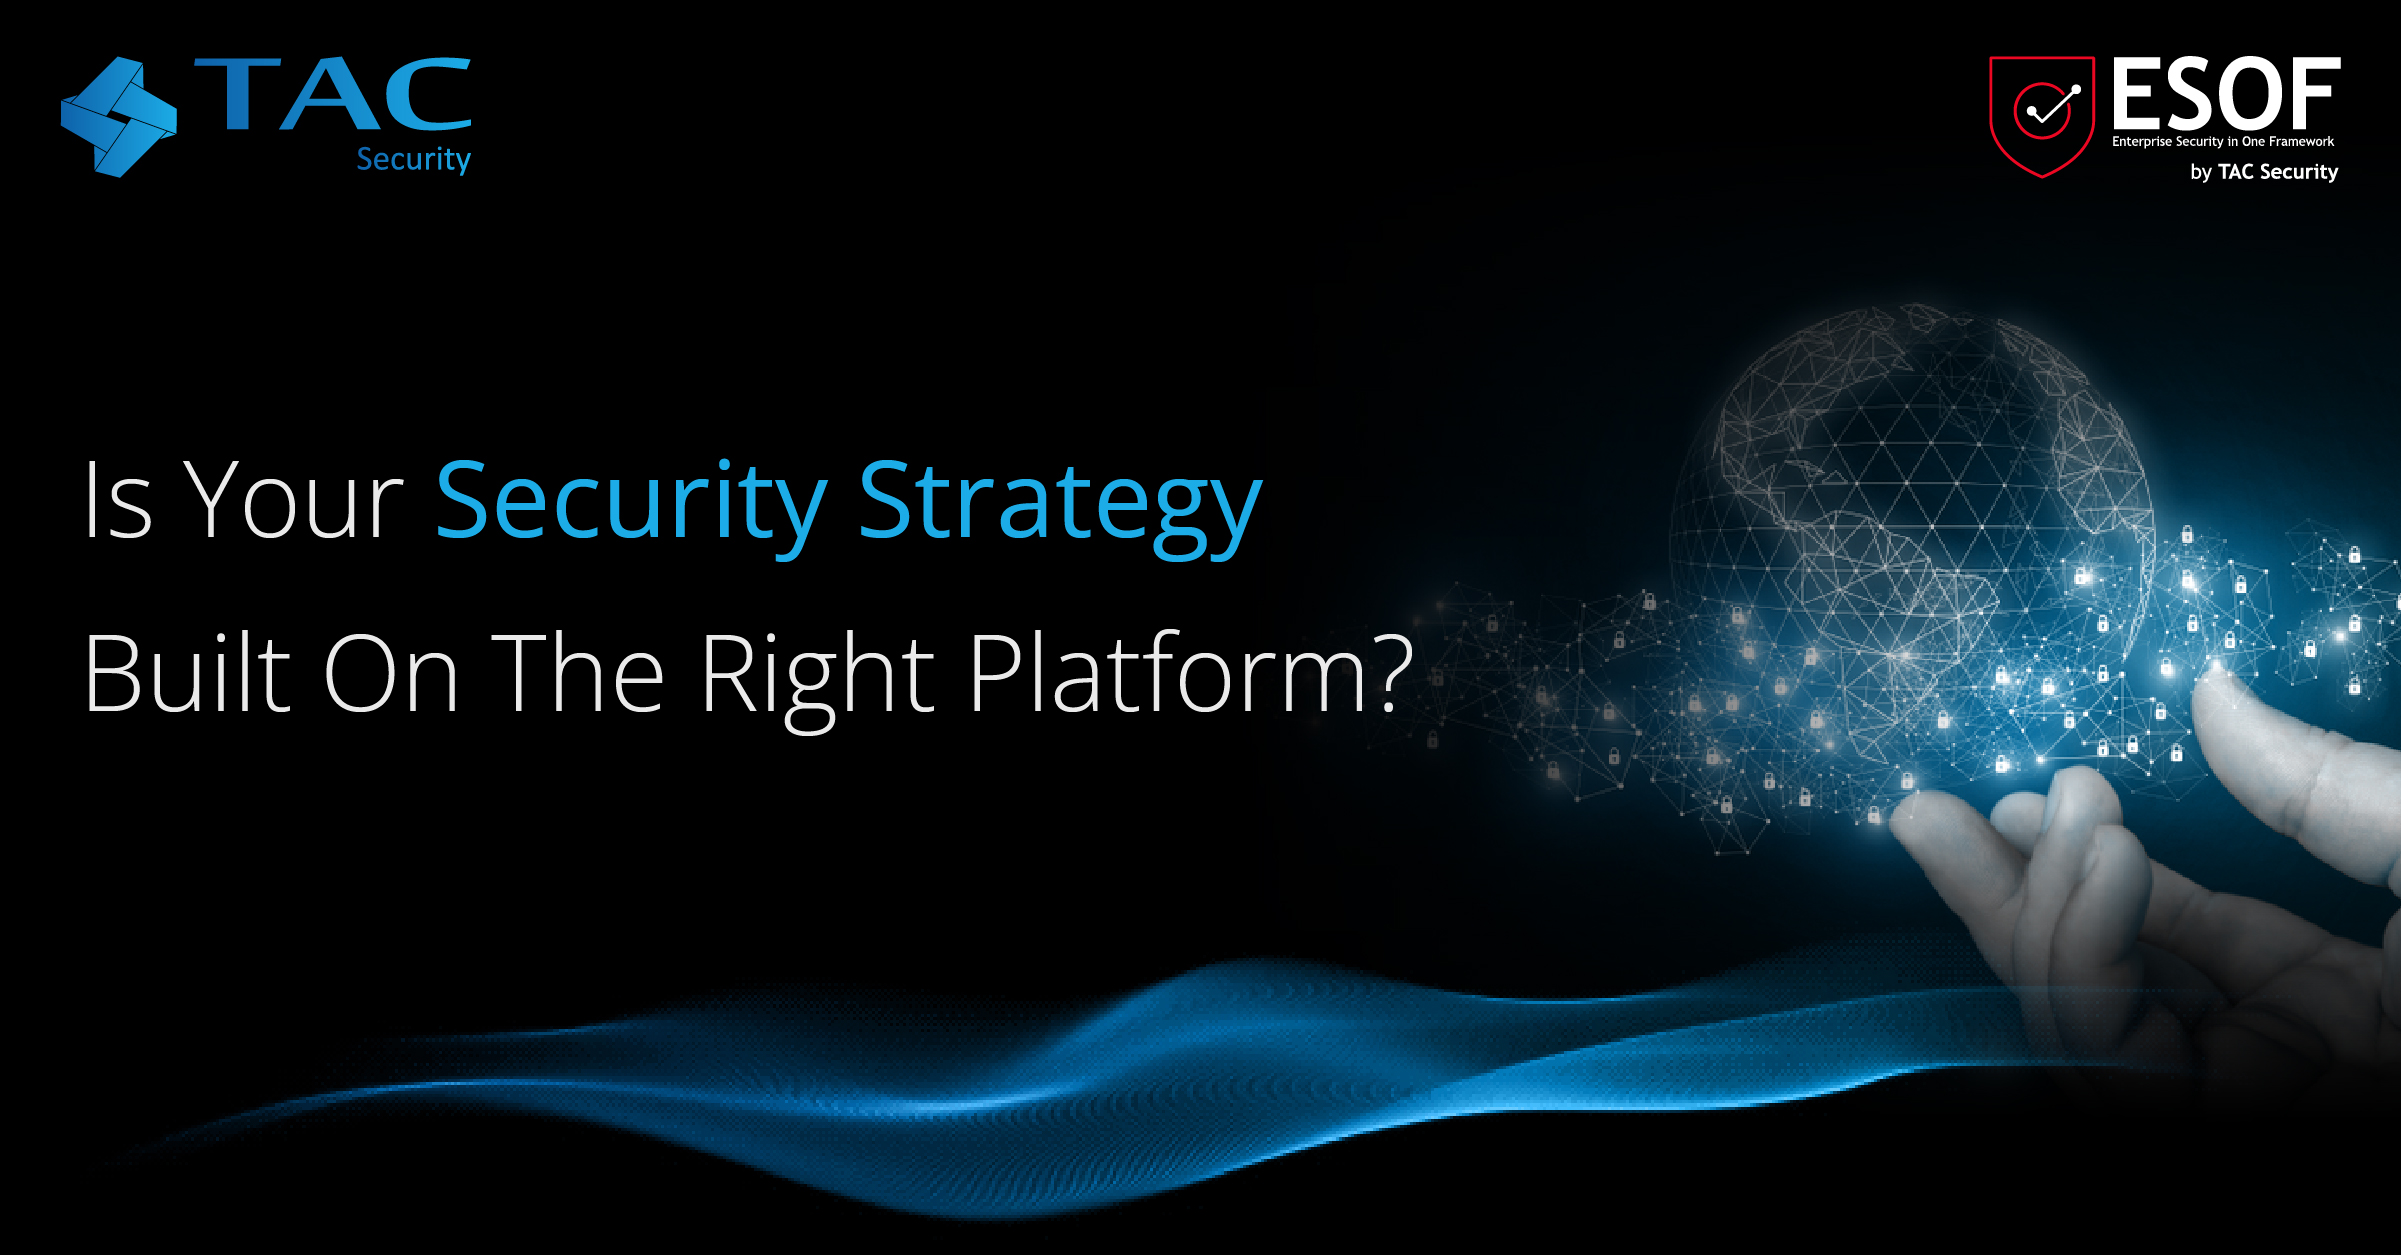 Security platform ESOF | Cyber security